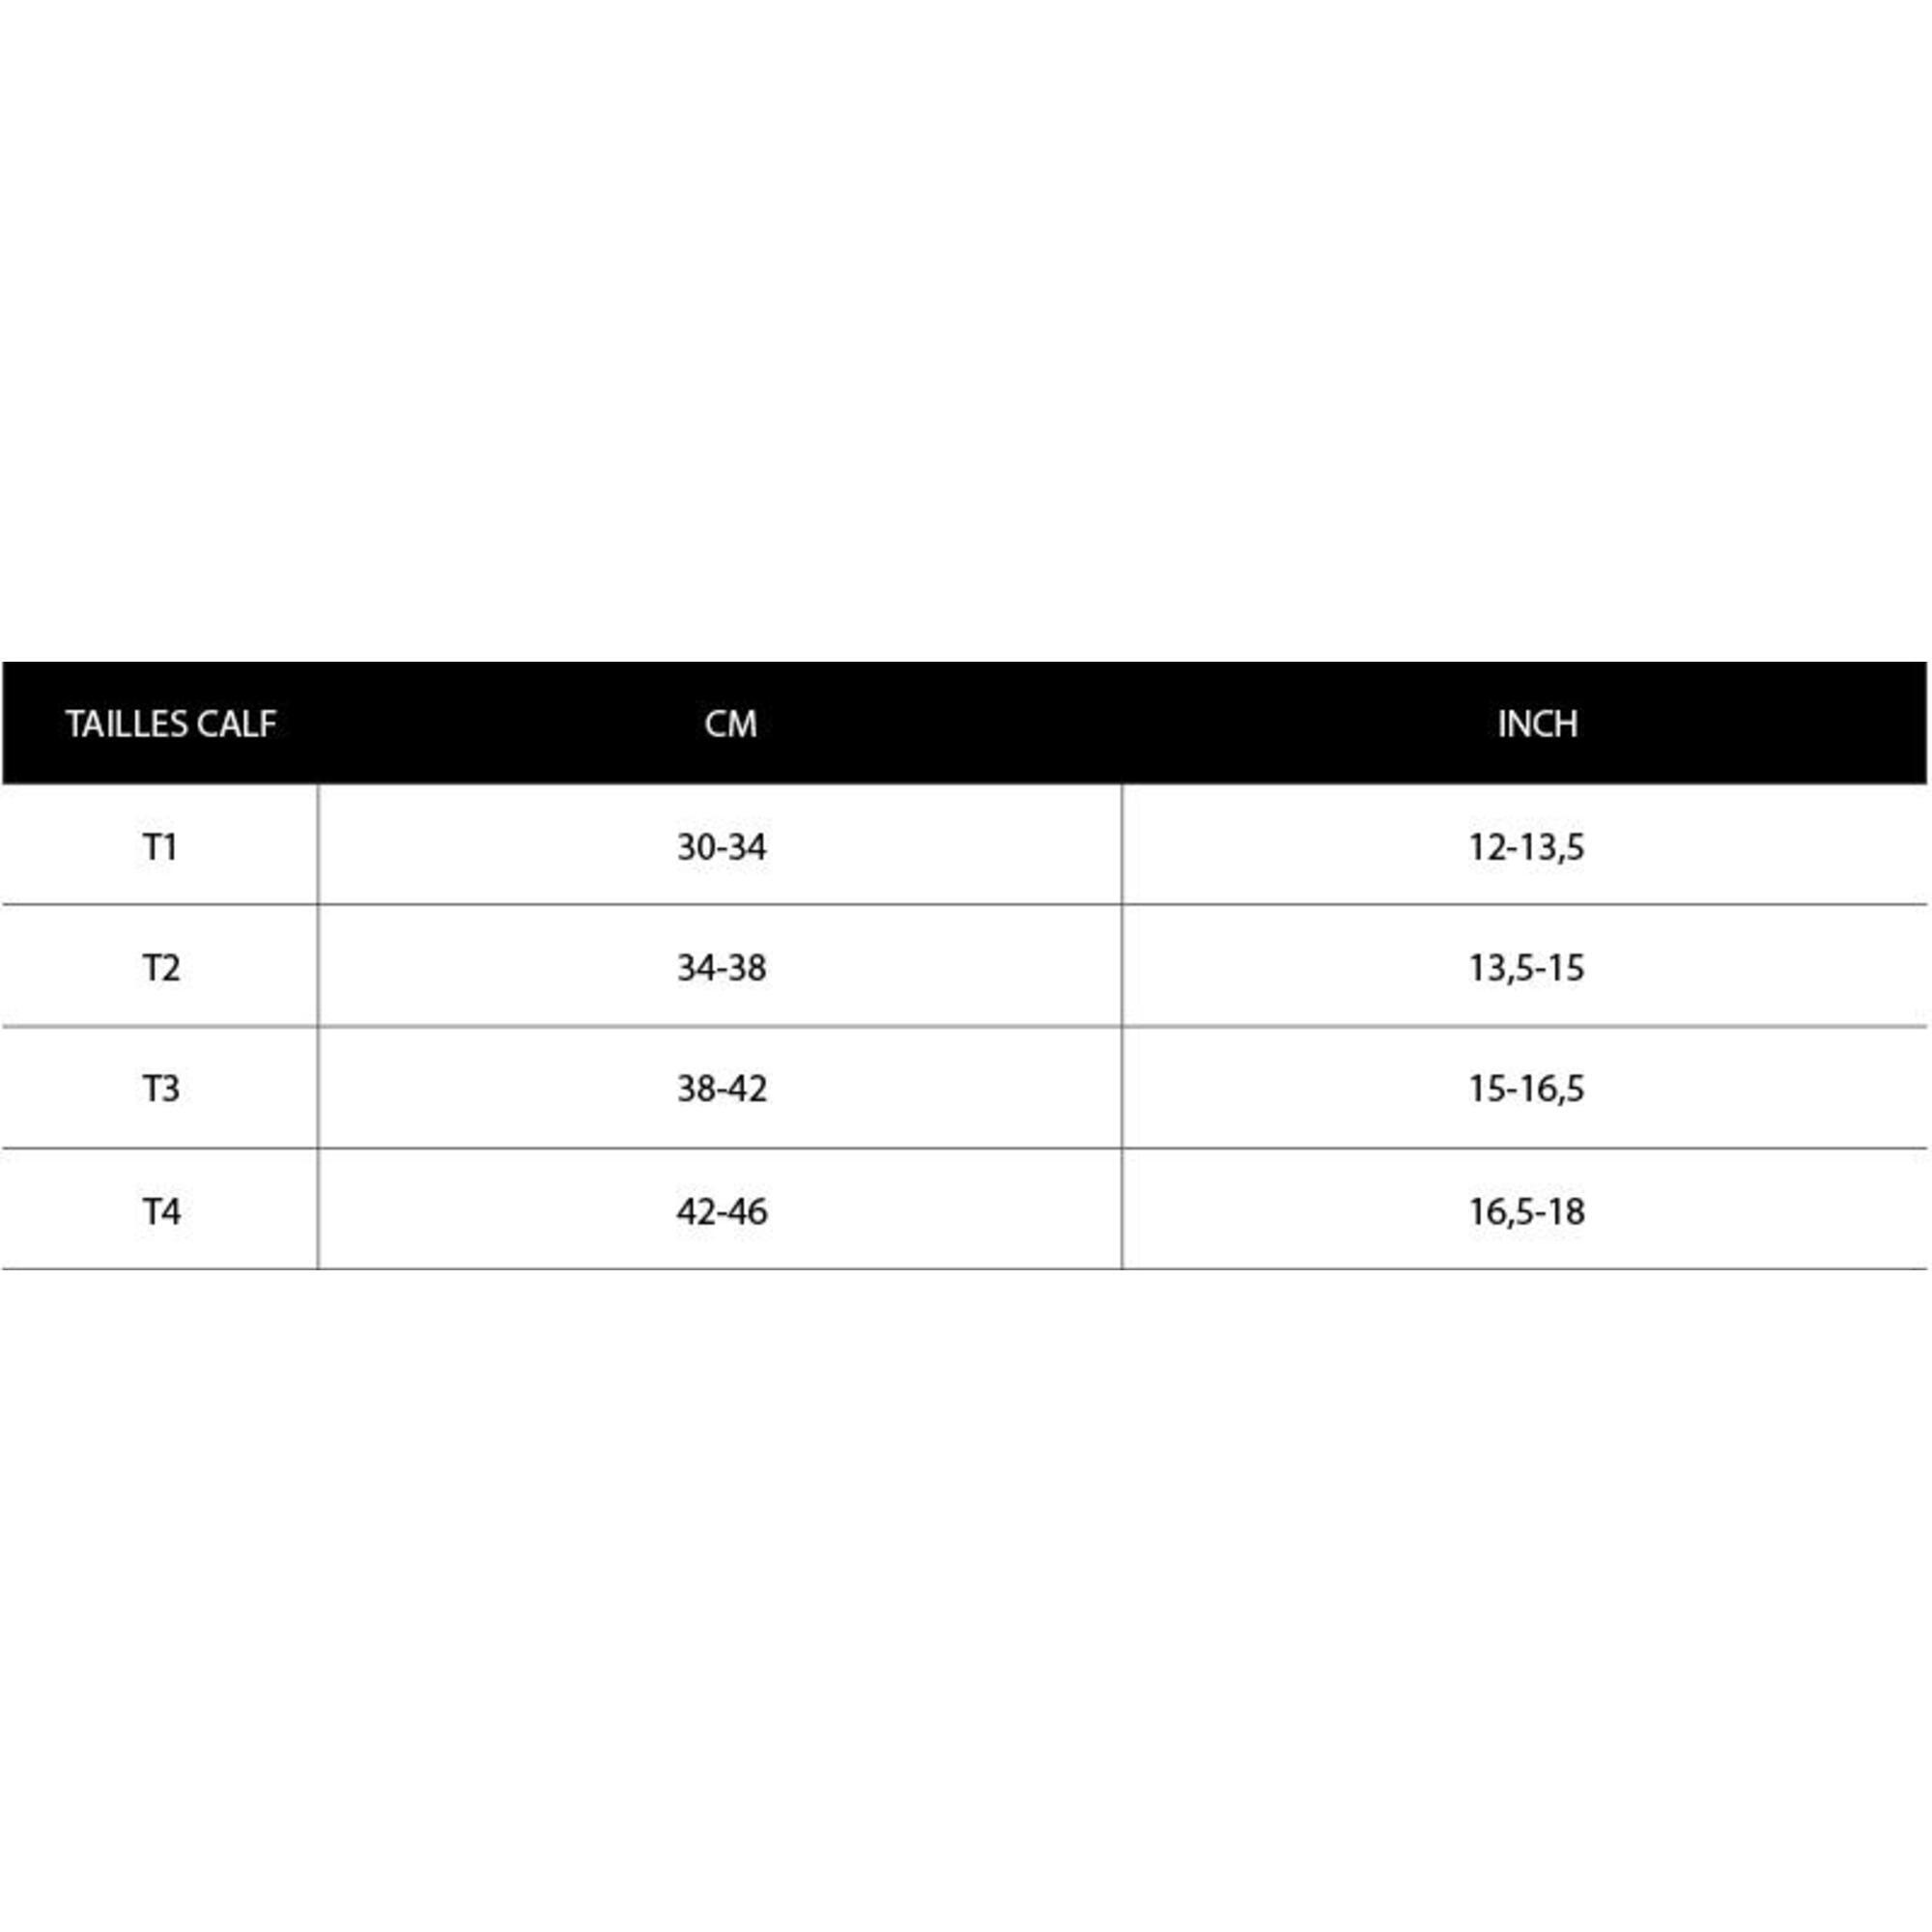 Kompressionsmanschette, für den Laufsport entwickelt - Ultralight Run Calf